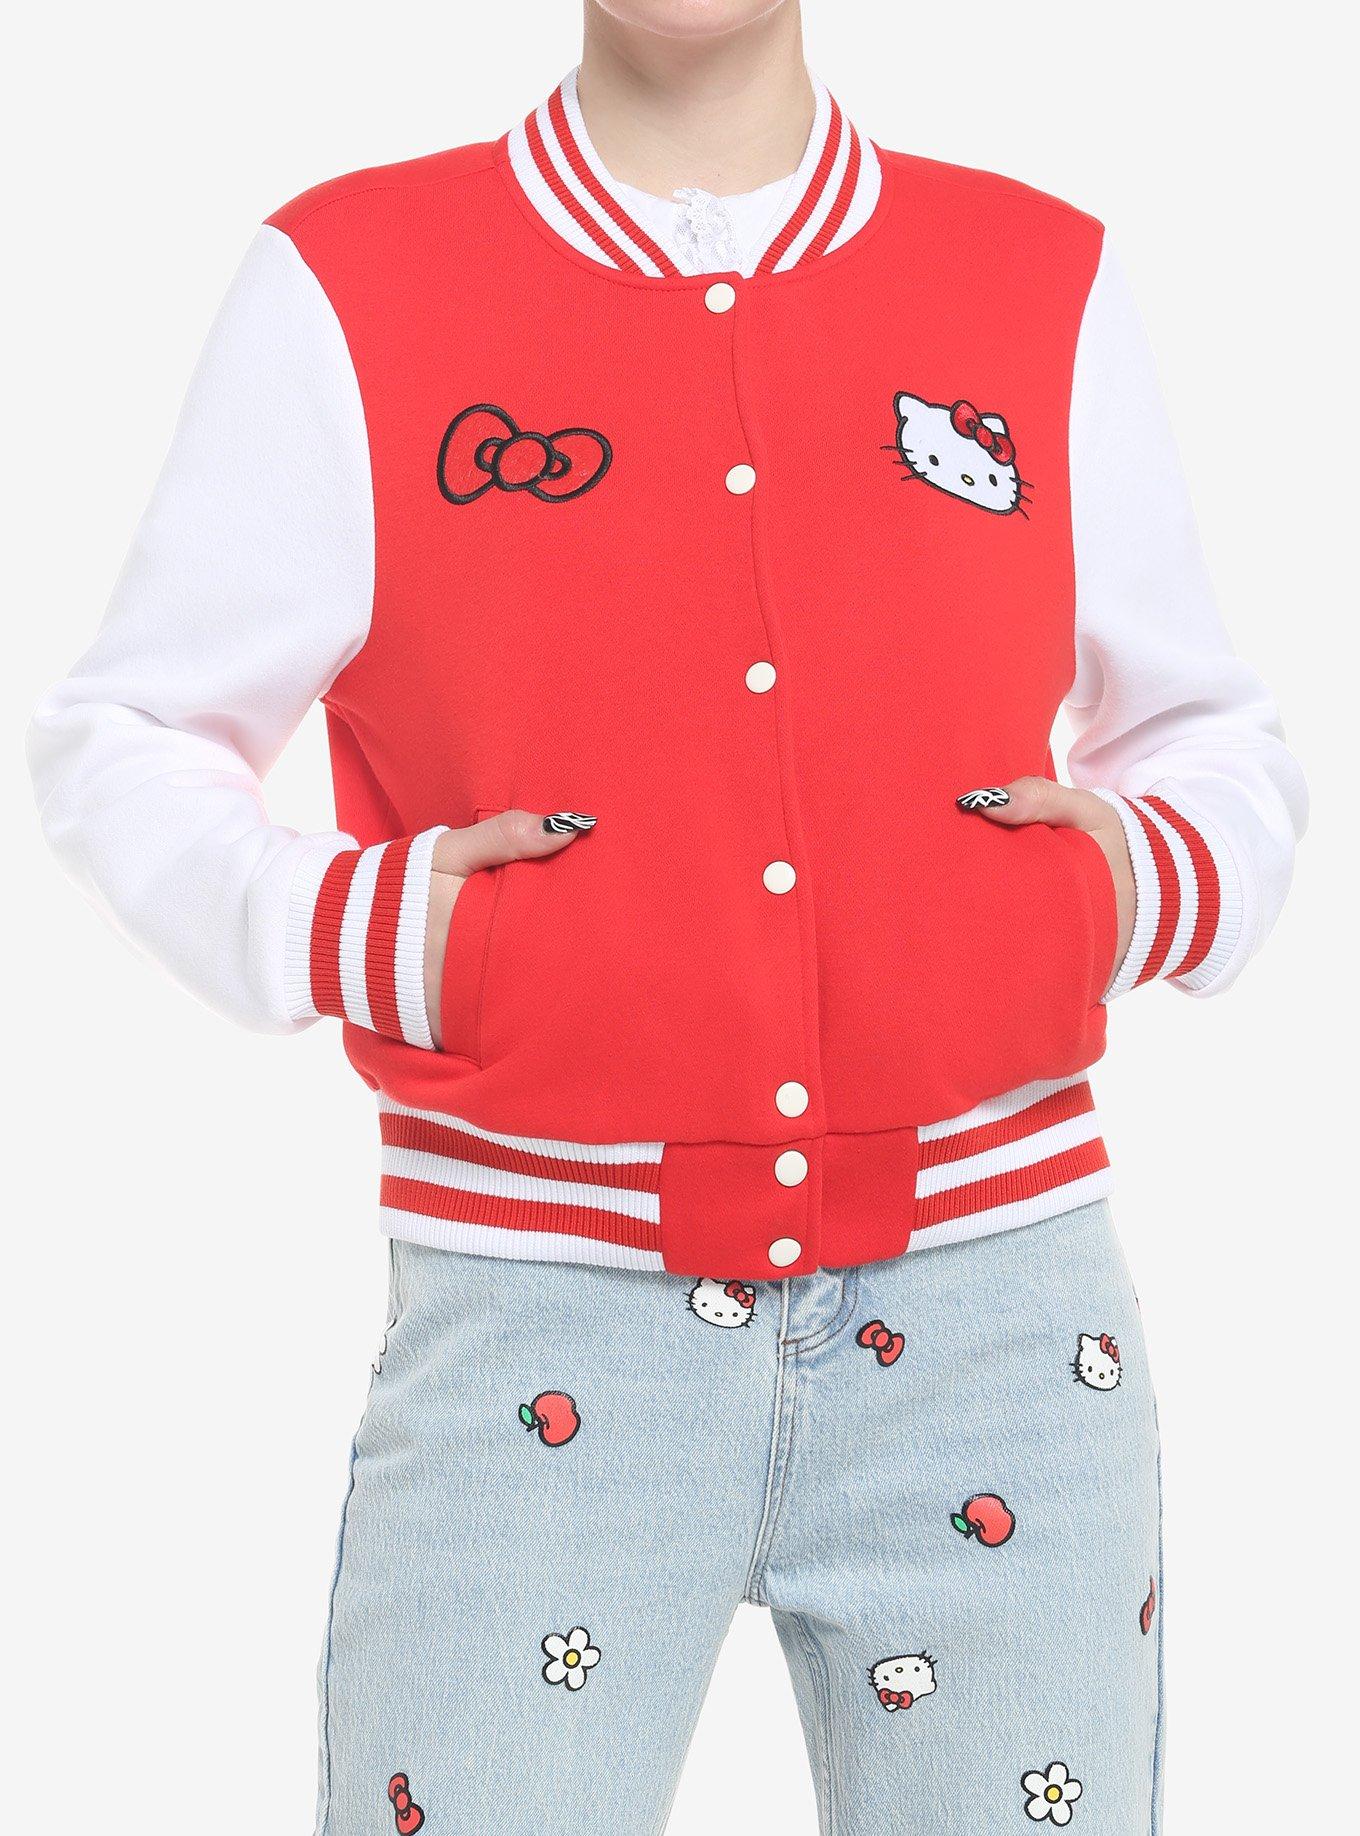 Hello Kitty & Friends Varsity Jacket